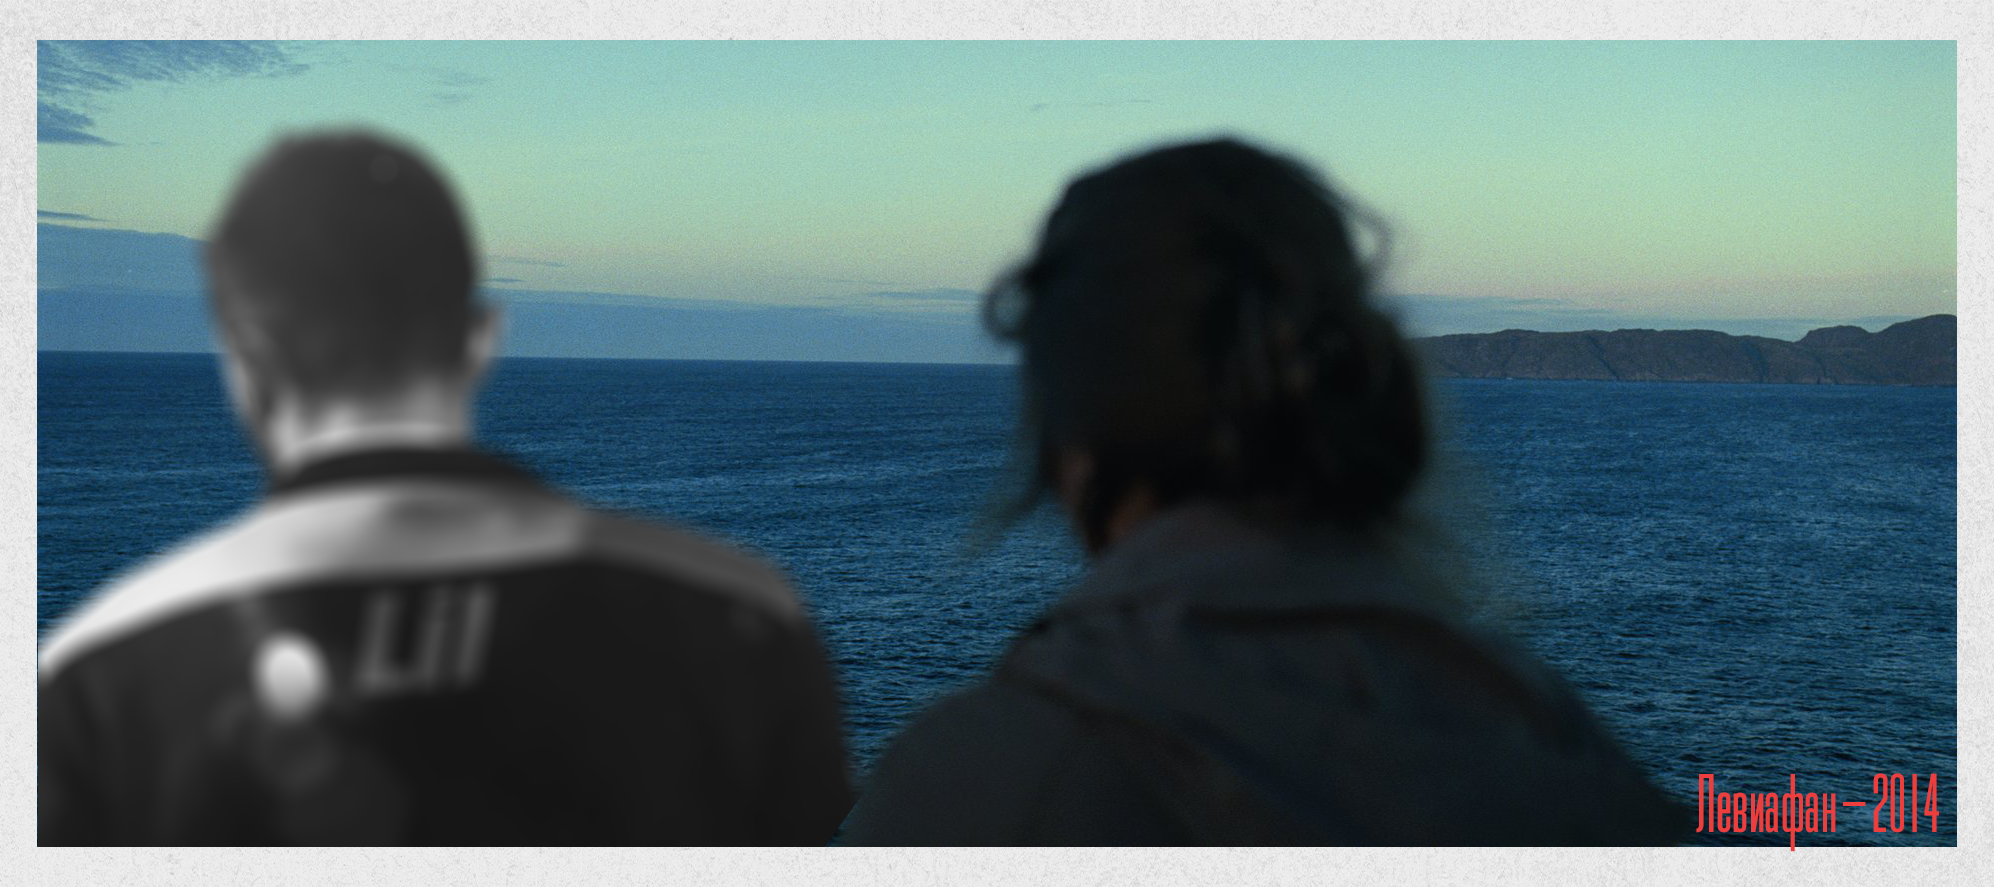 Лил на фоне пейзажей Баренцева моря вместе с героиней х/ф Левиафан — 2014. Коллаж: Алексей Леденёв